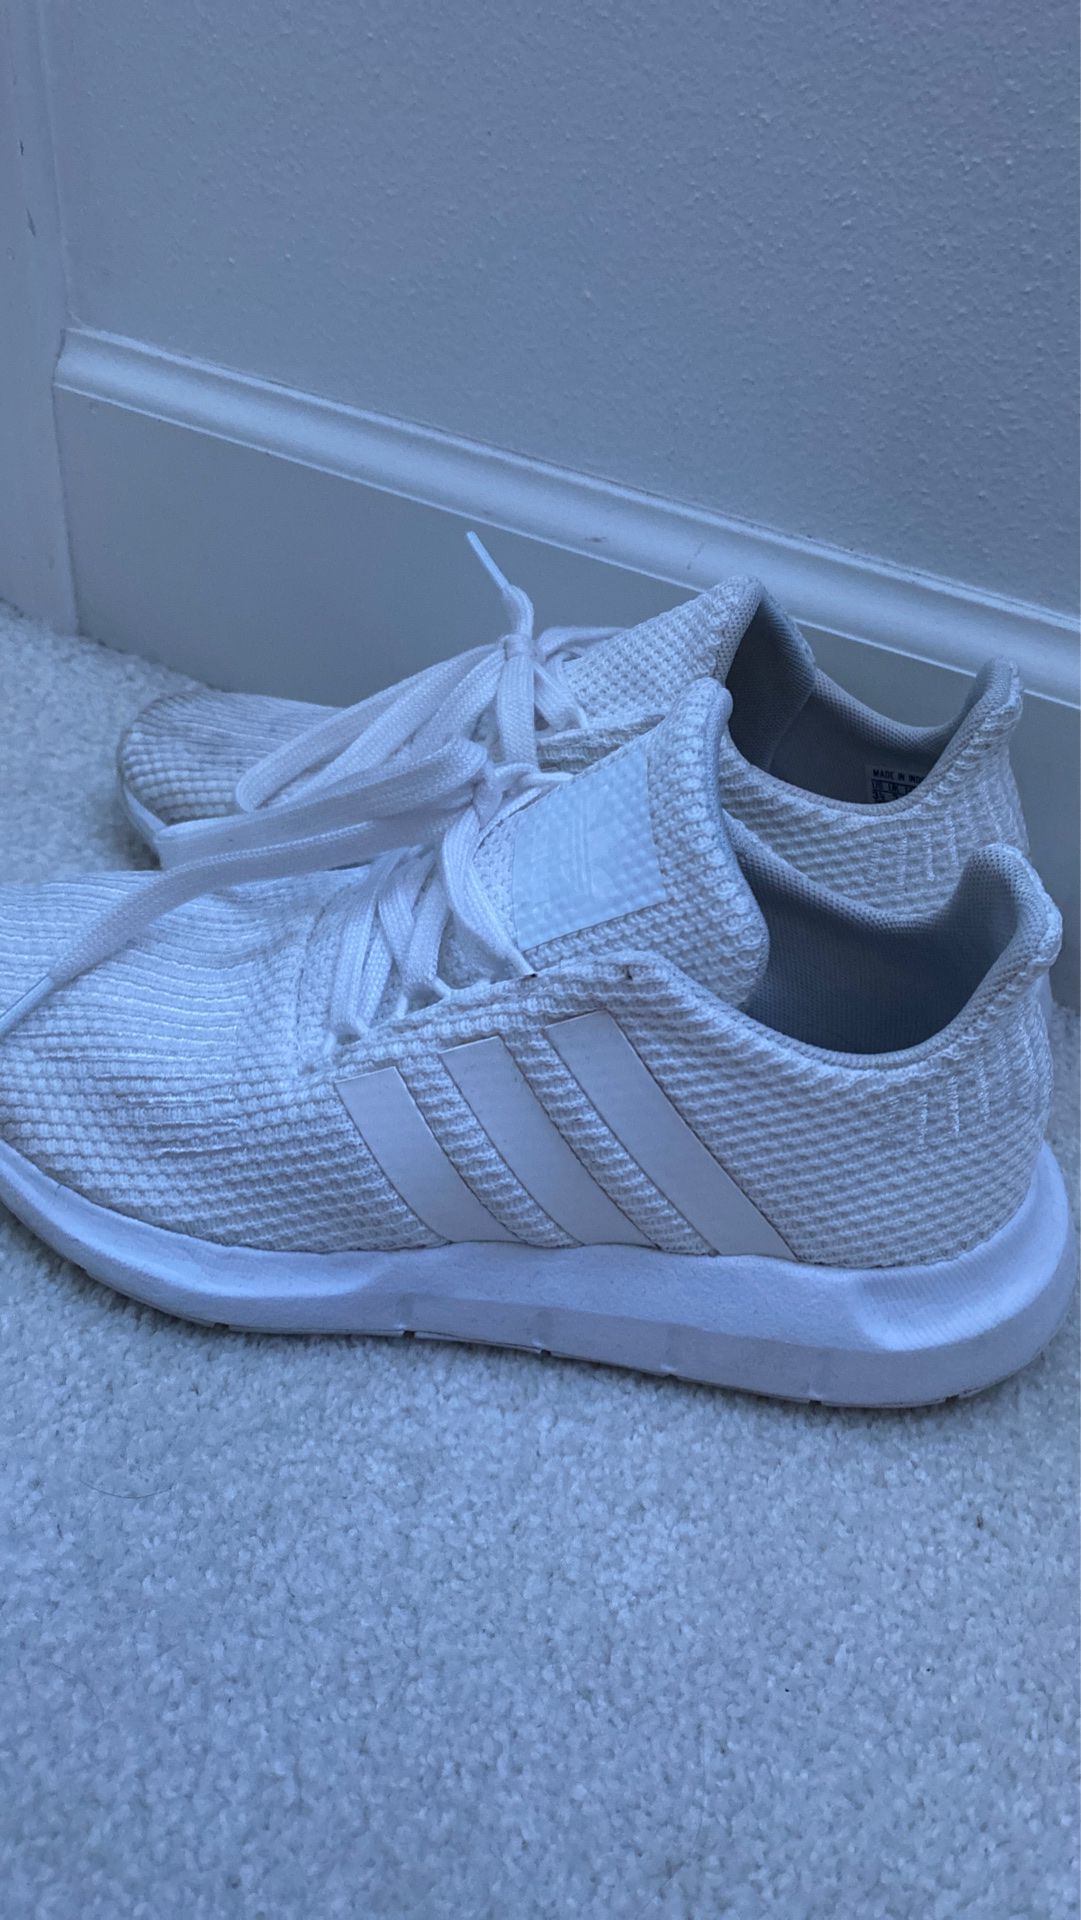 White Adidas tennis shoes